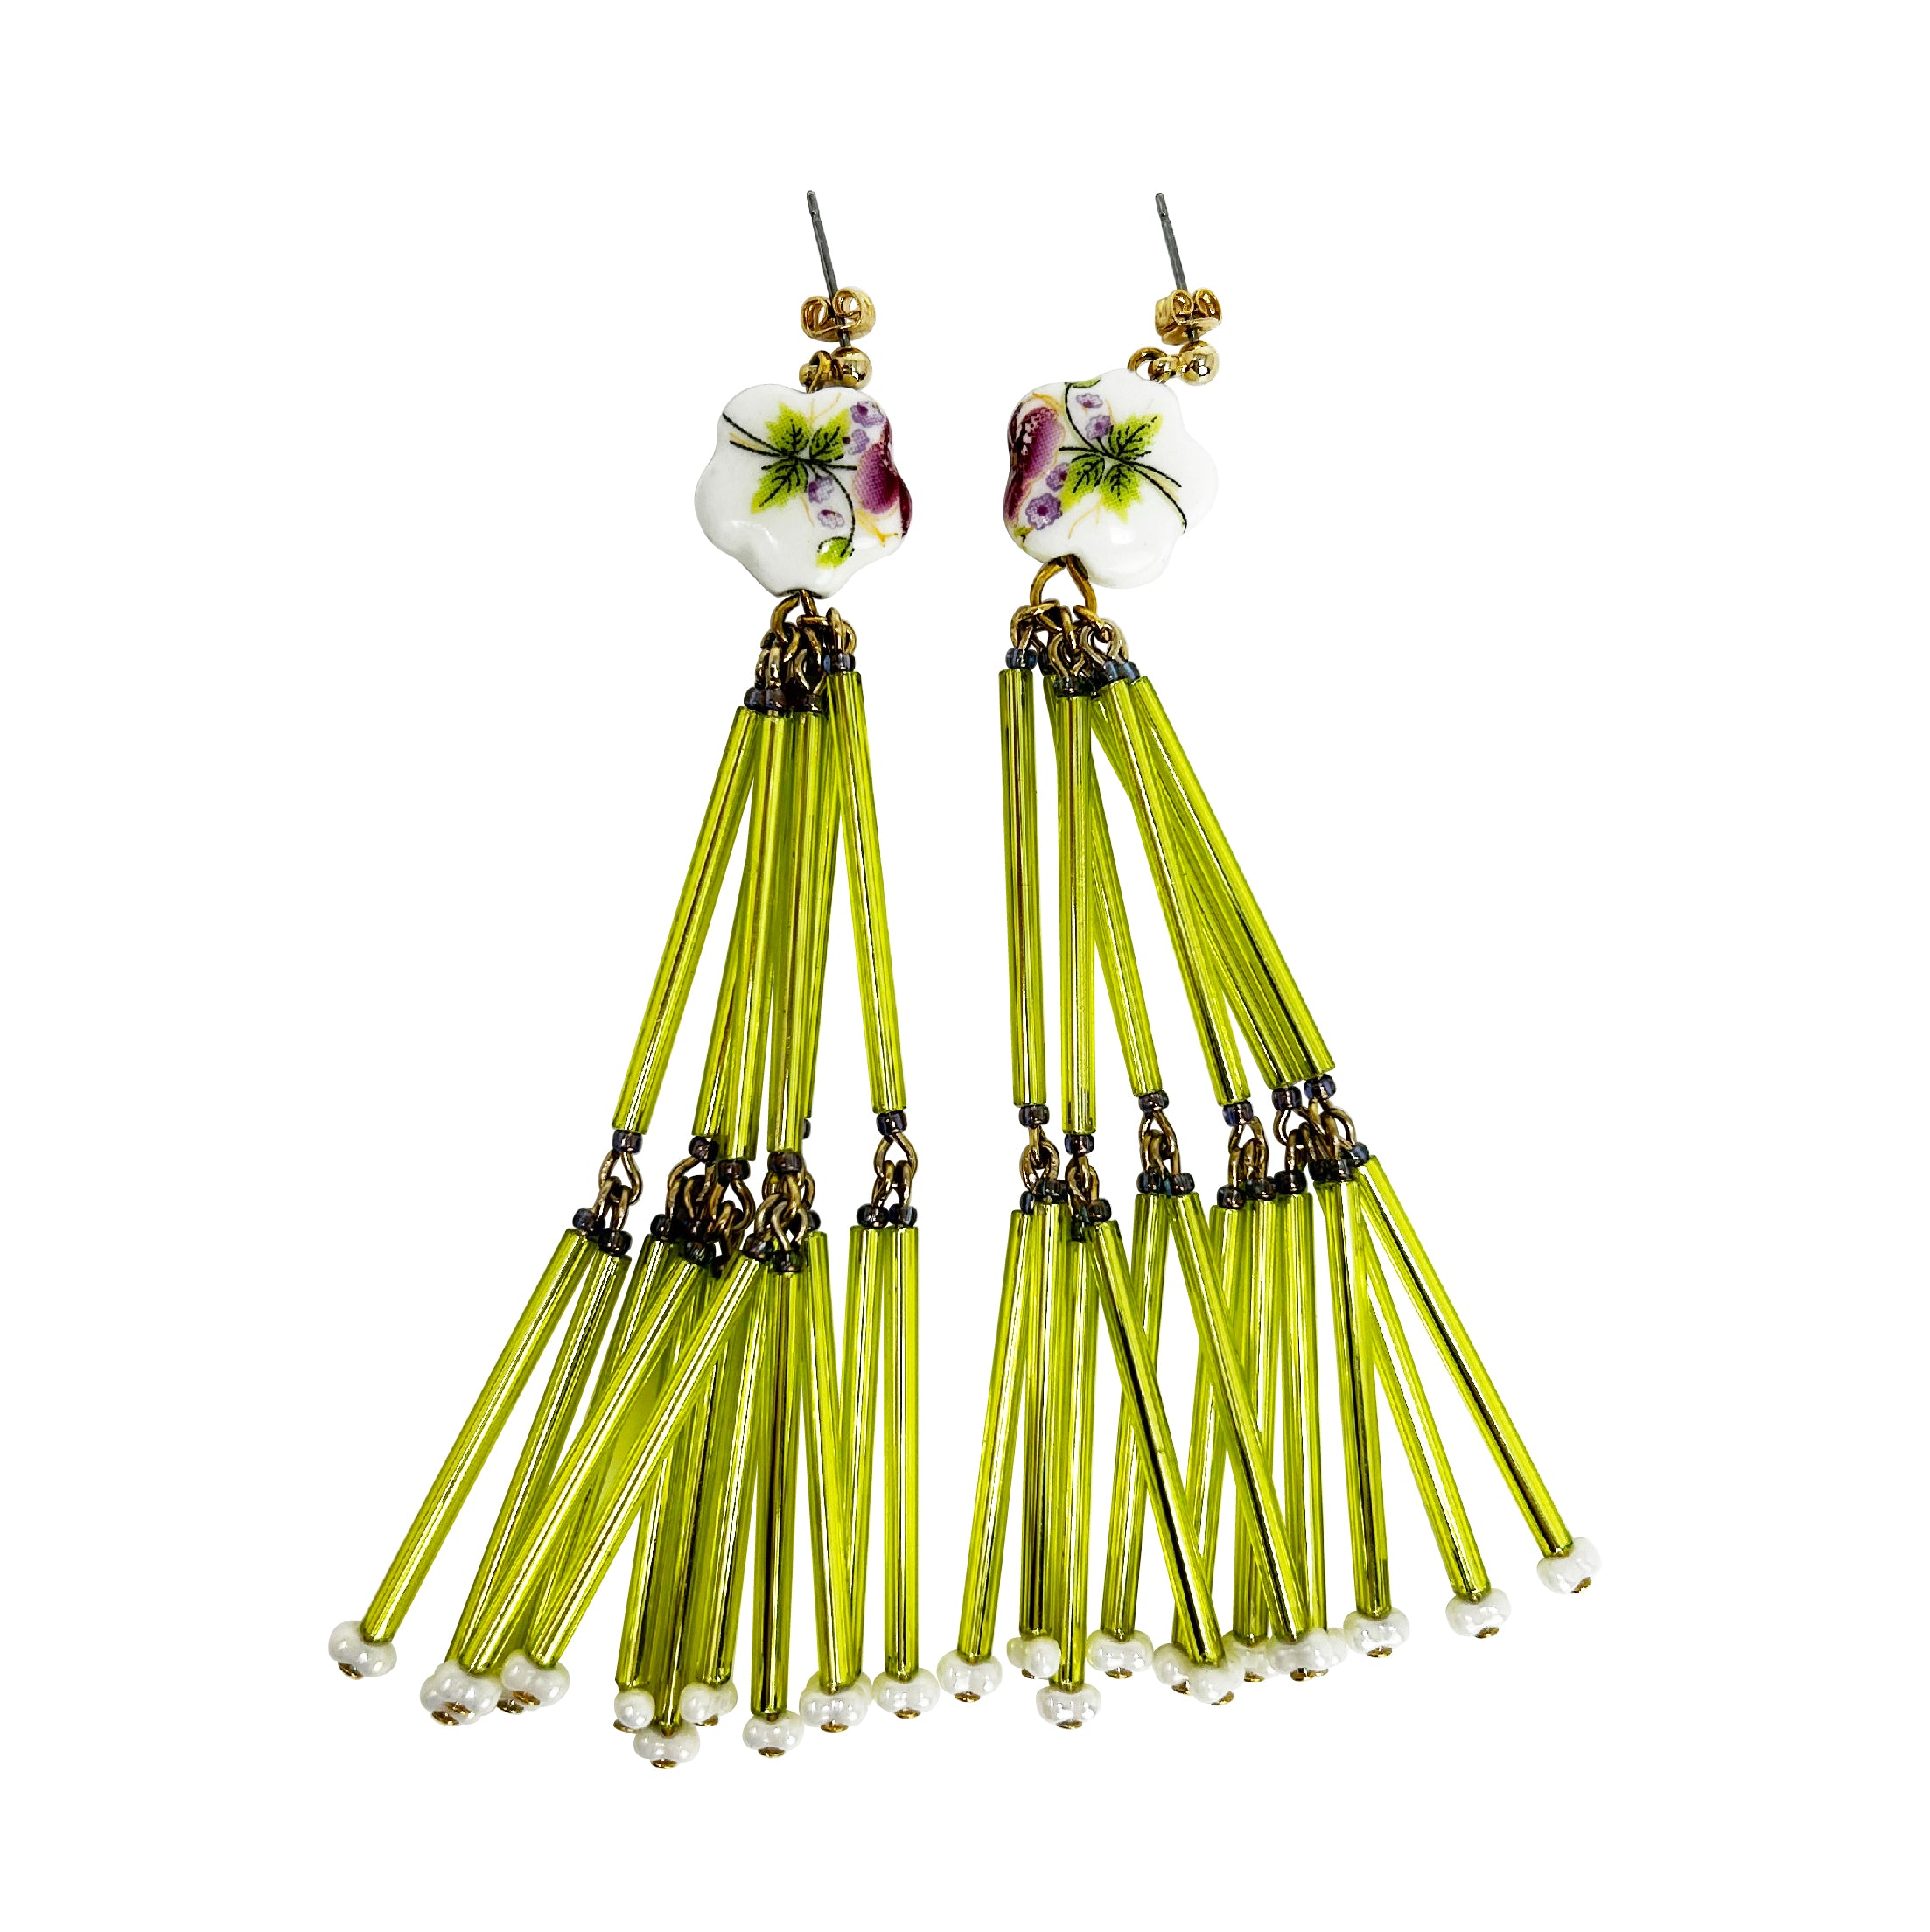 Chinese neon fringe earrings